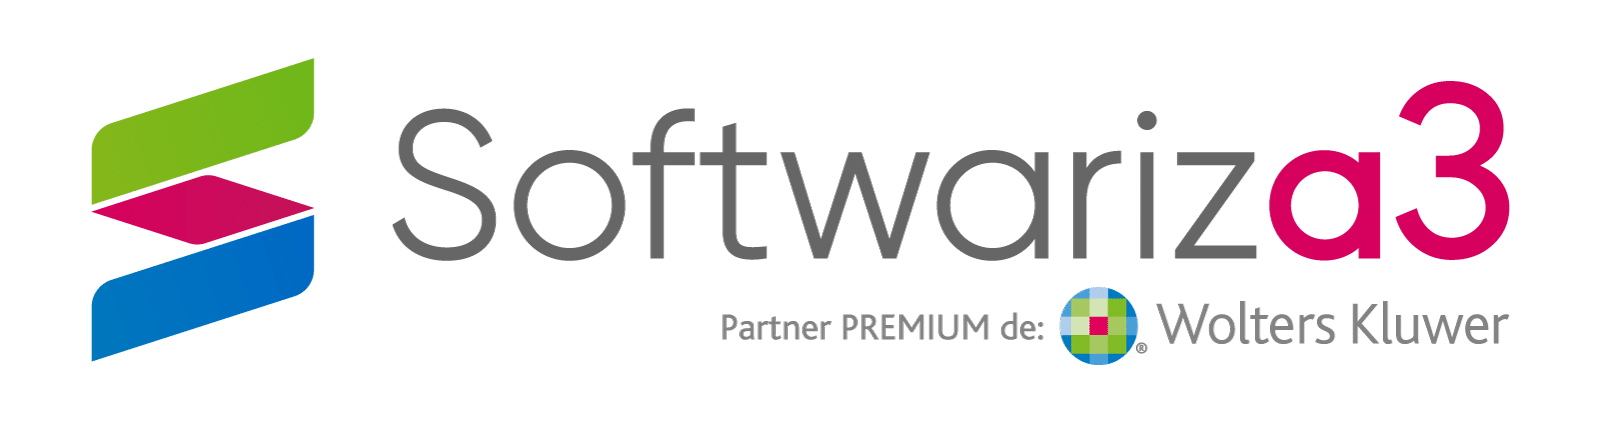 Logo-Softwariza3-Premium-HD